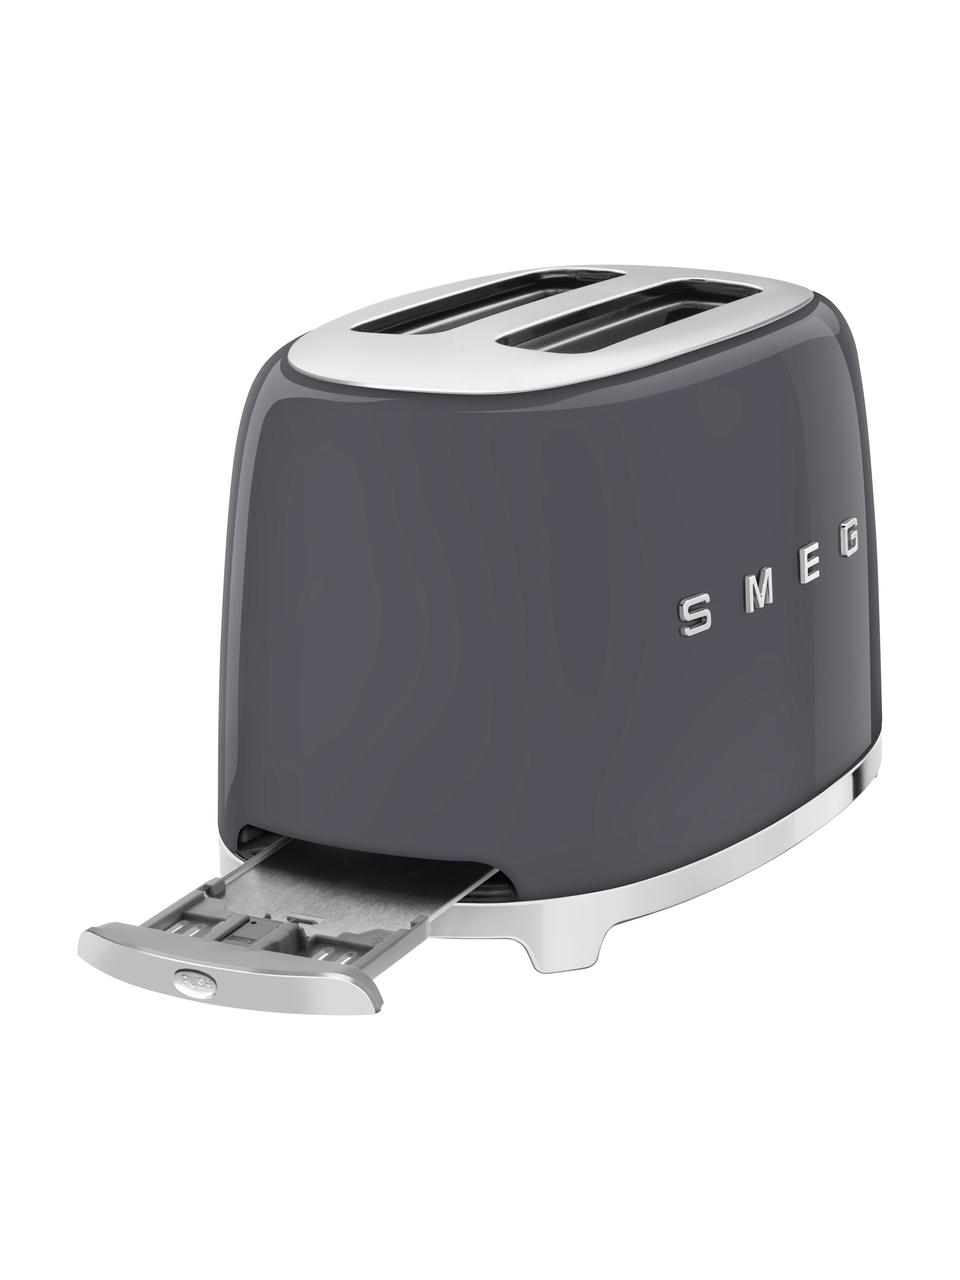 Kompakt Toaster 50's Style, Edelstahl, lackiert, Grau, glänzend, B 31 x T 20 cm